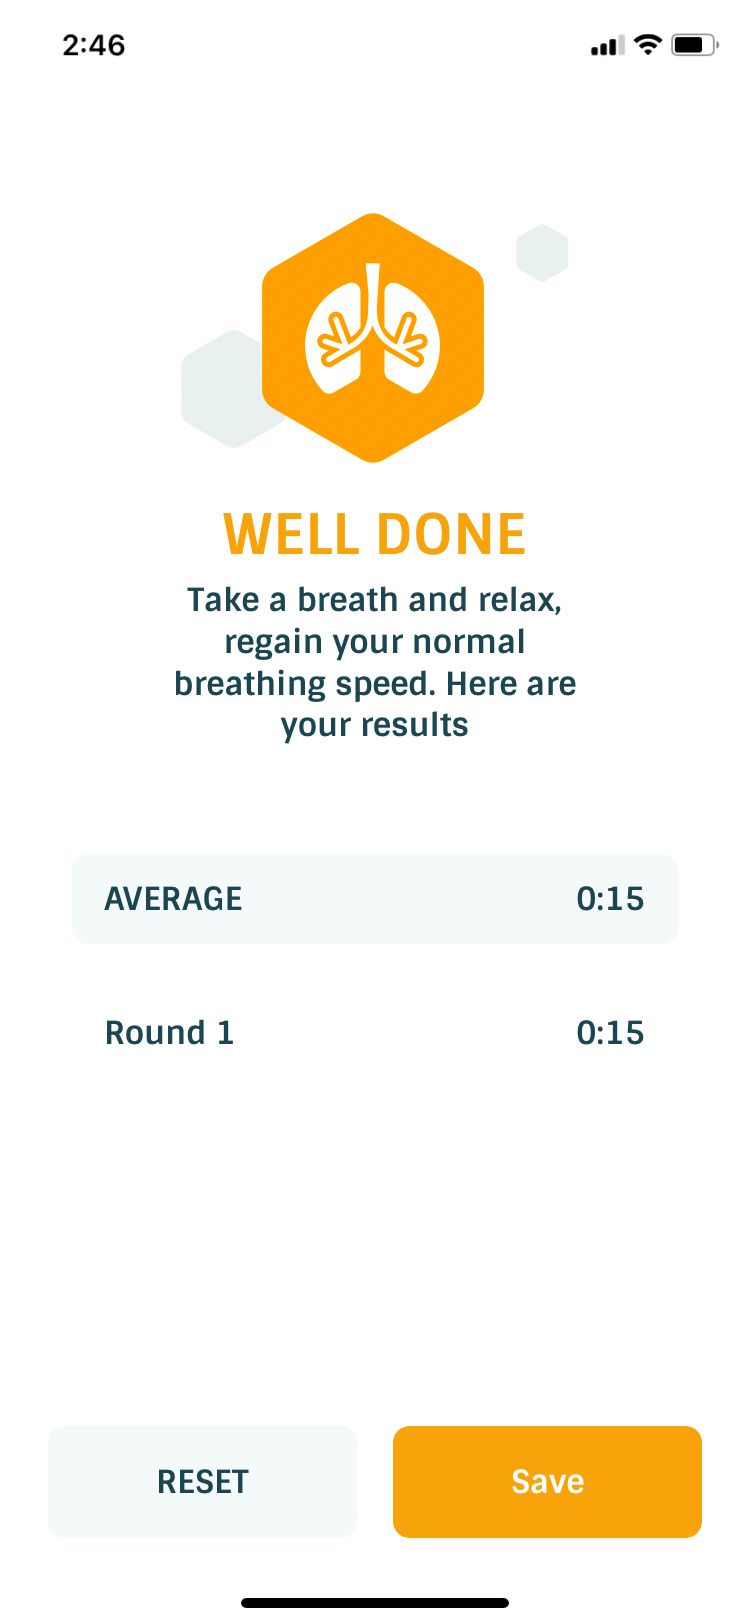 Wim Hof Method breathing session results